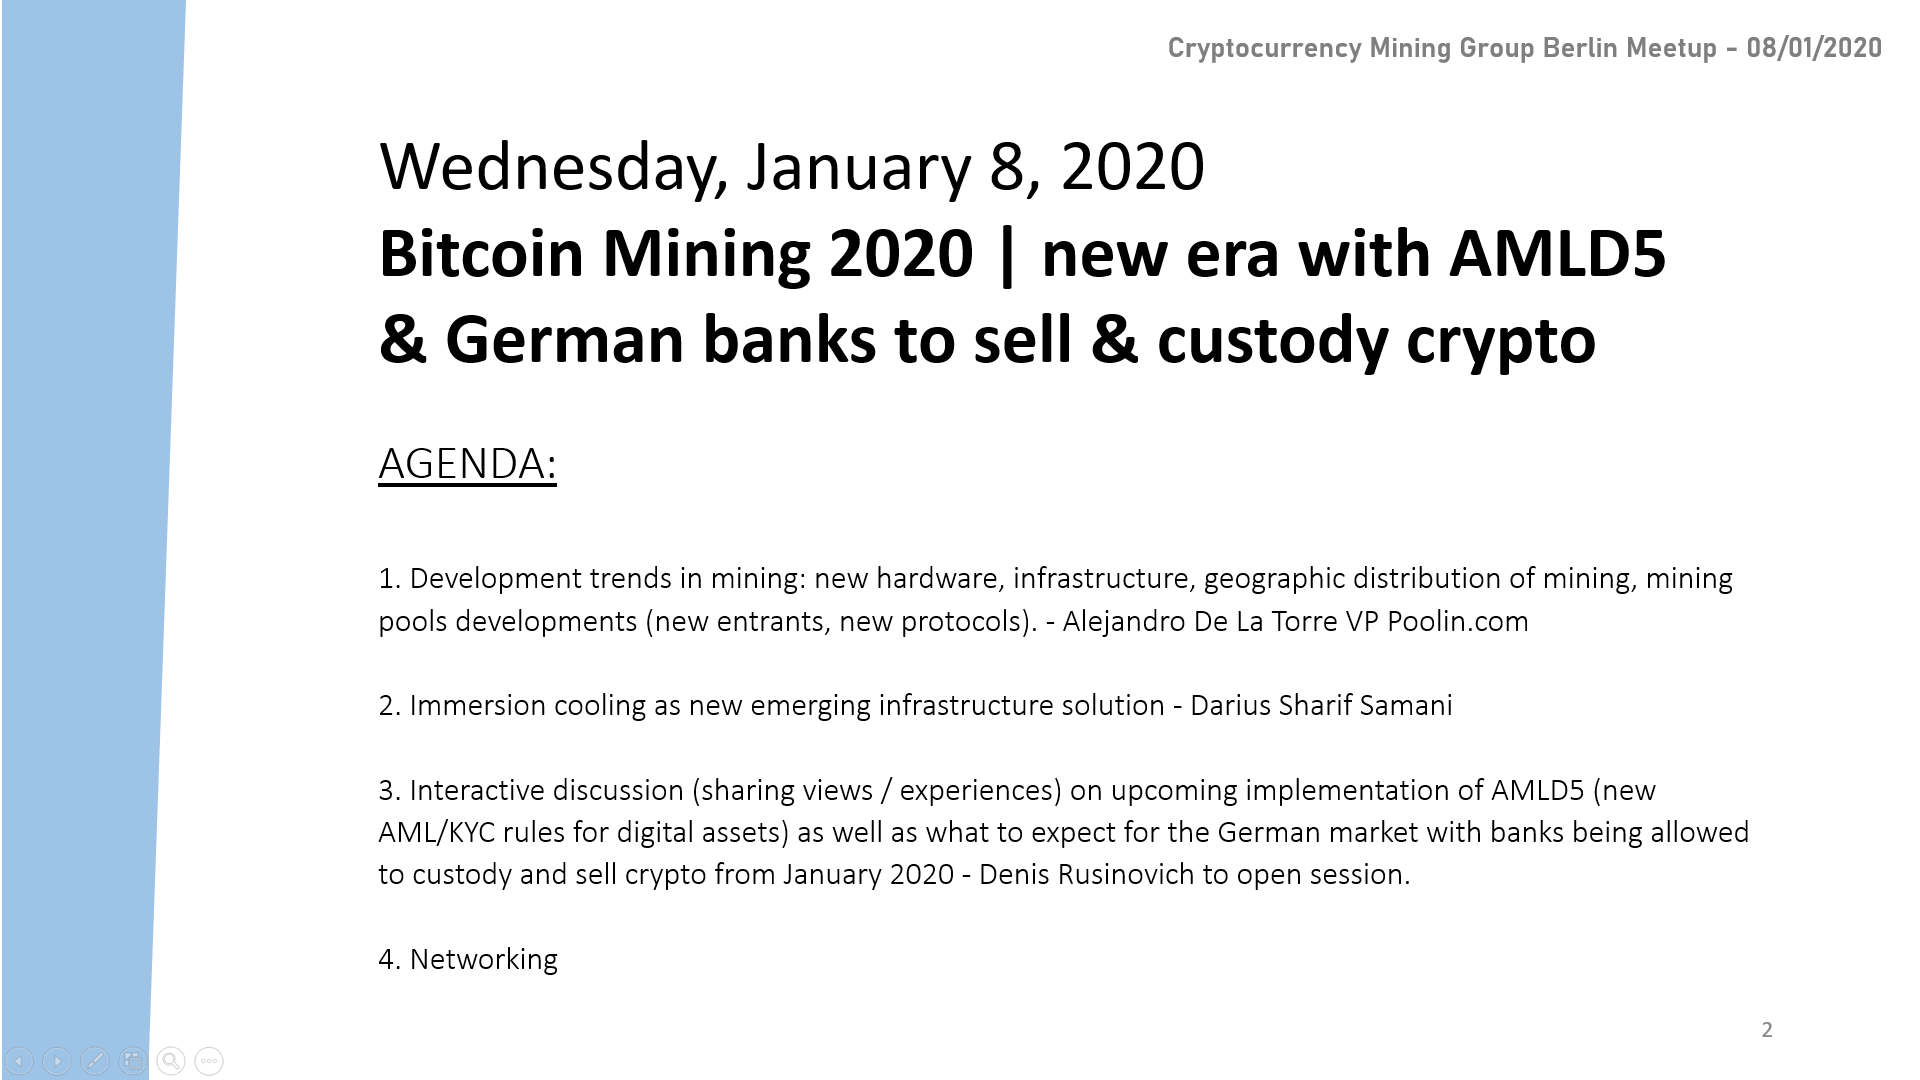 Bitcoin Mining 2020 | new era with AMLD5 & German banks to sell & custody crypto